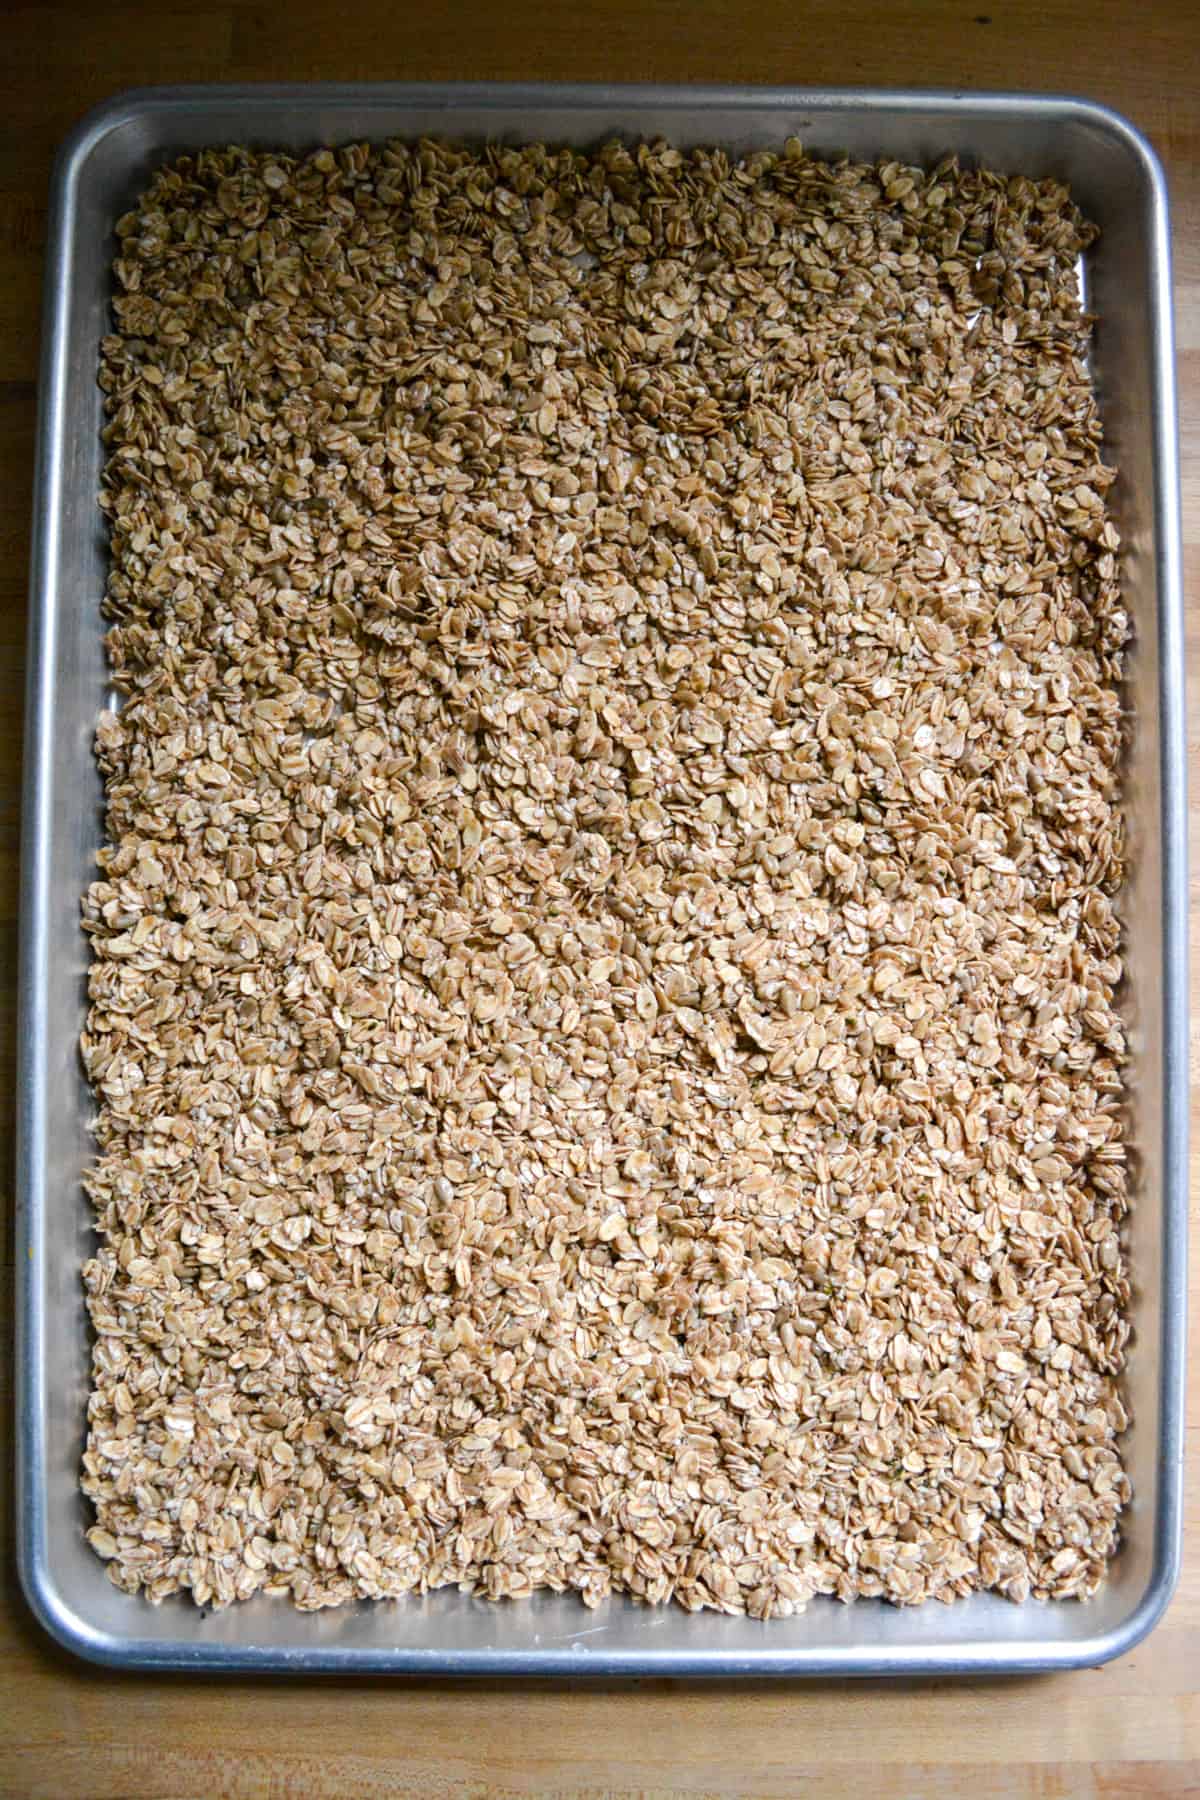 Homemade cinnamon granola pressed onto a baking sheet.